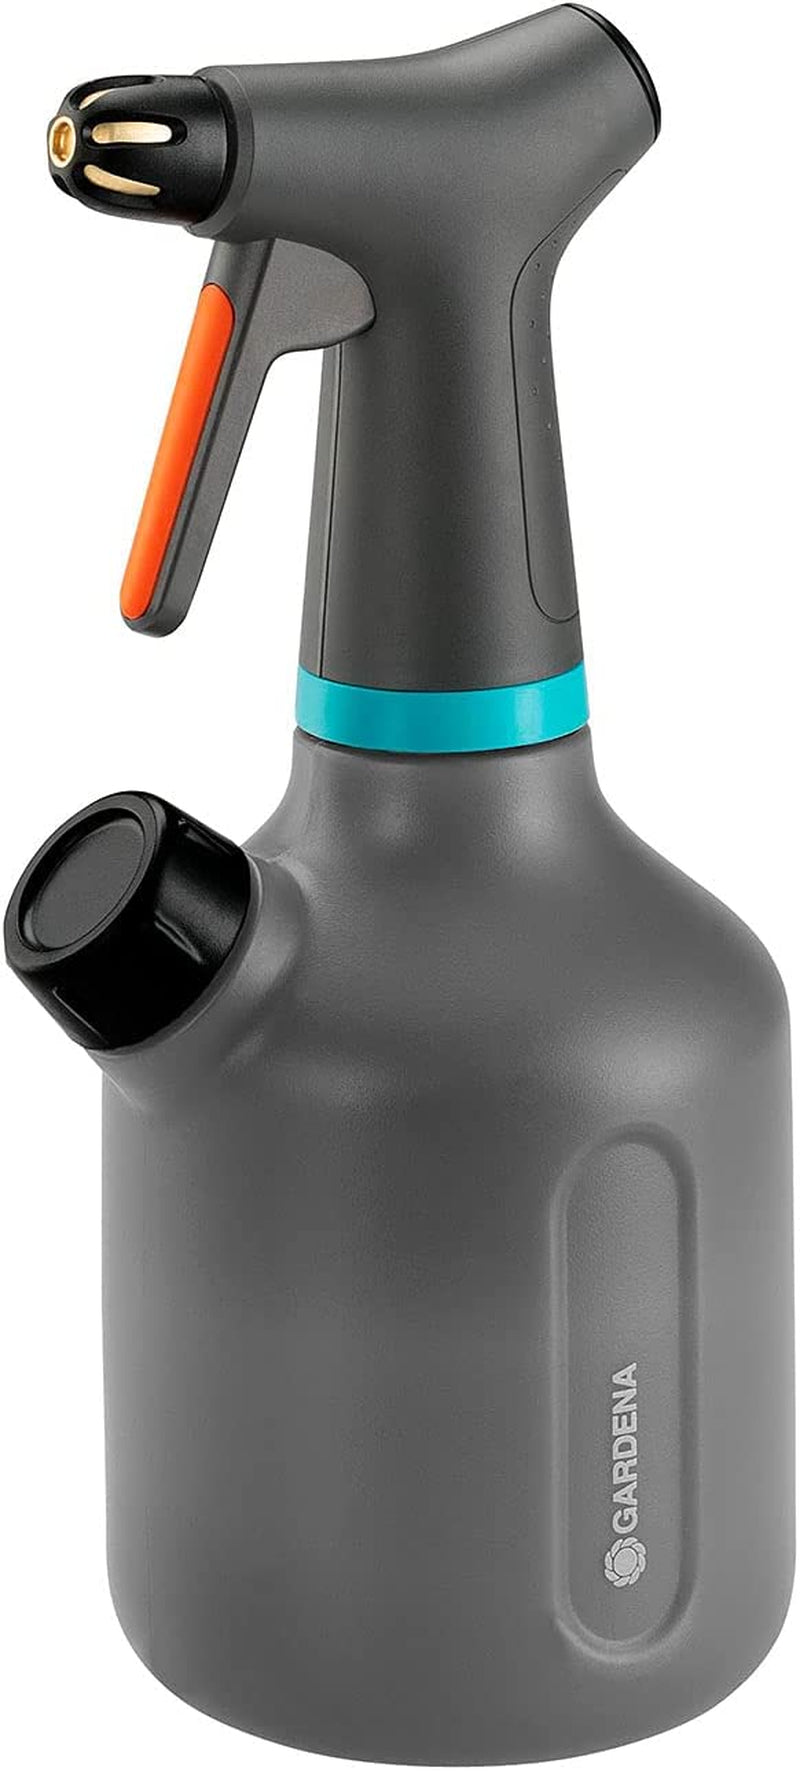 Gardena, GARDENA Pump Sprayer 1 L, Black/Grey/Orange/Turquoise